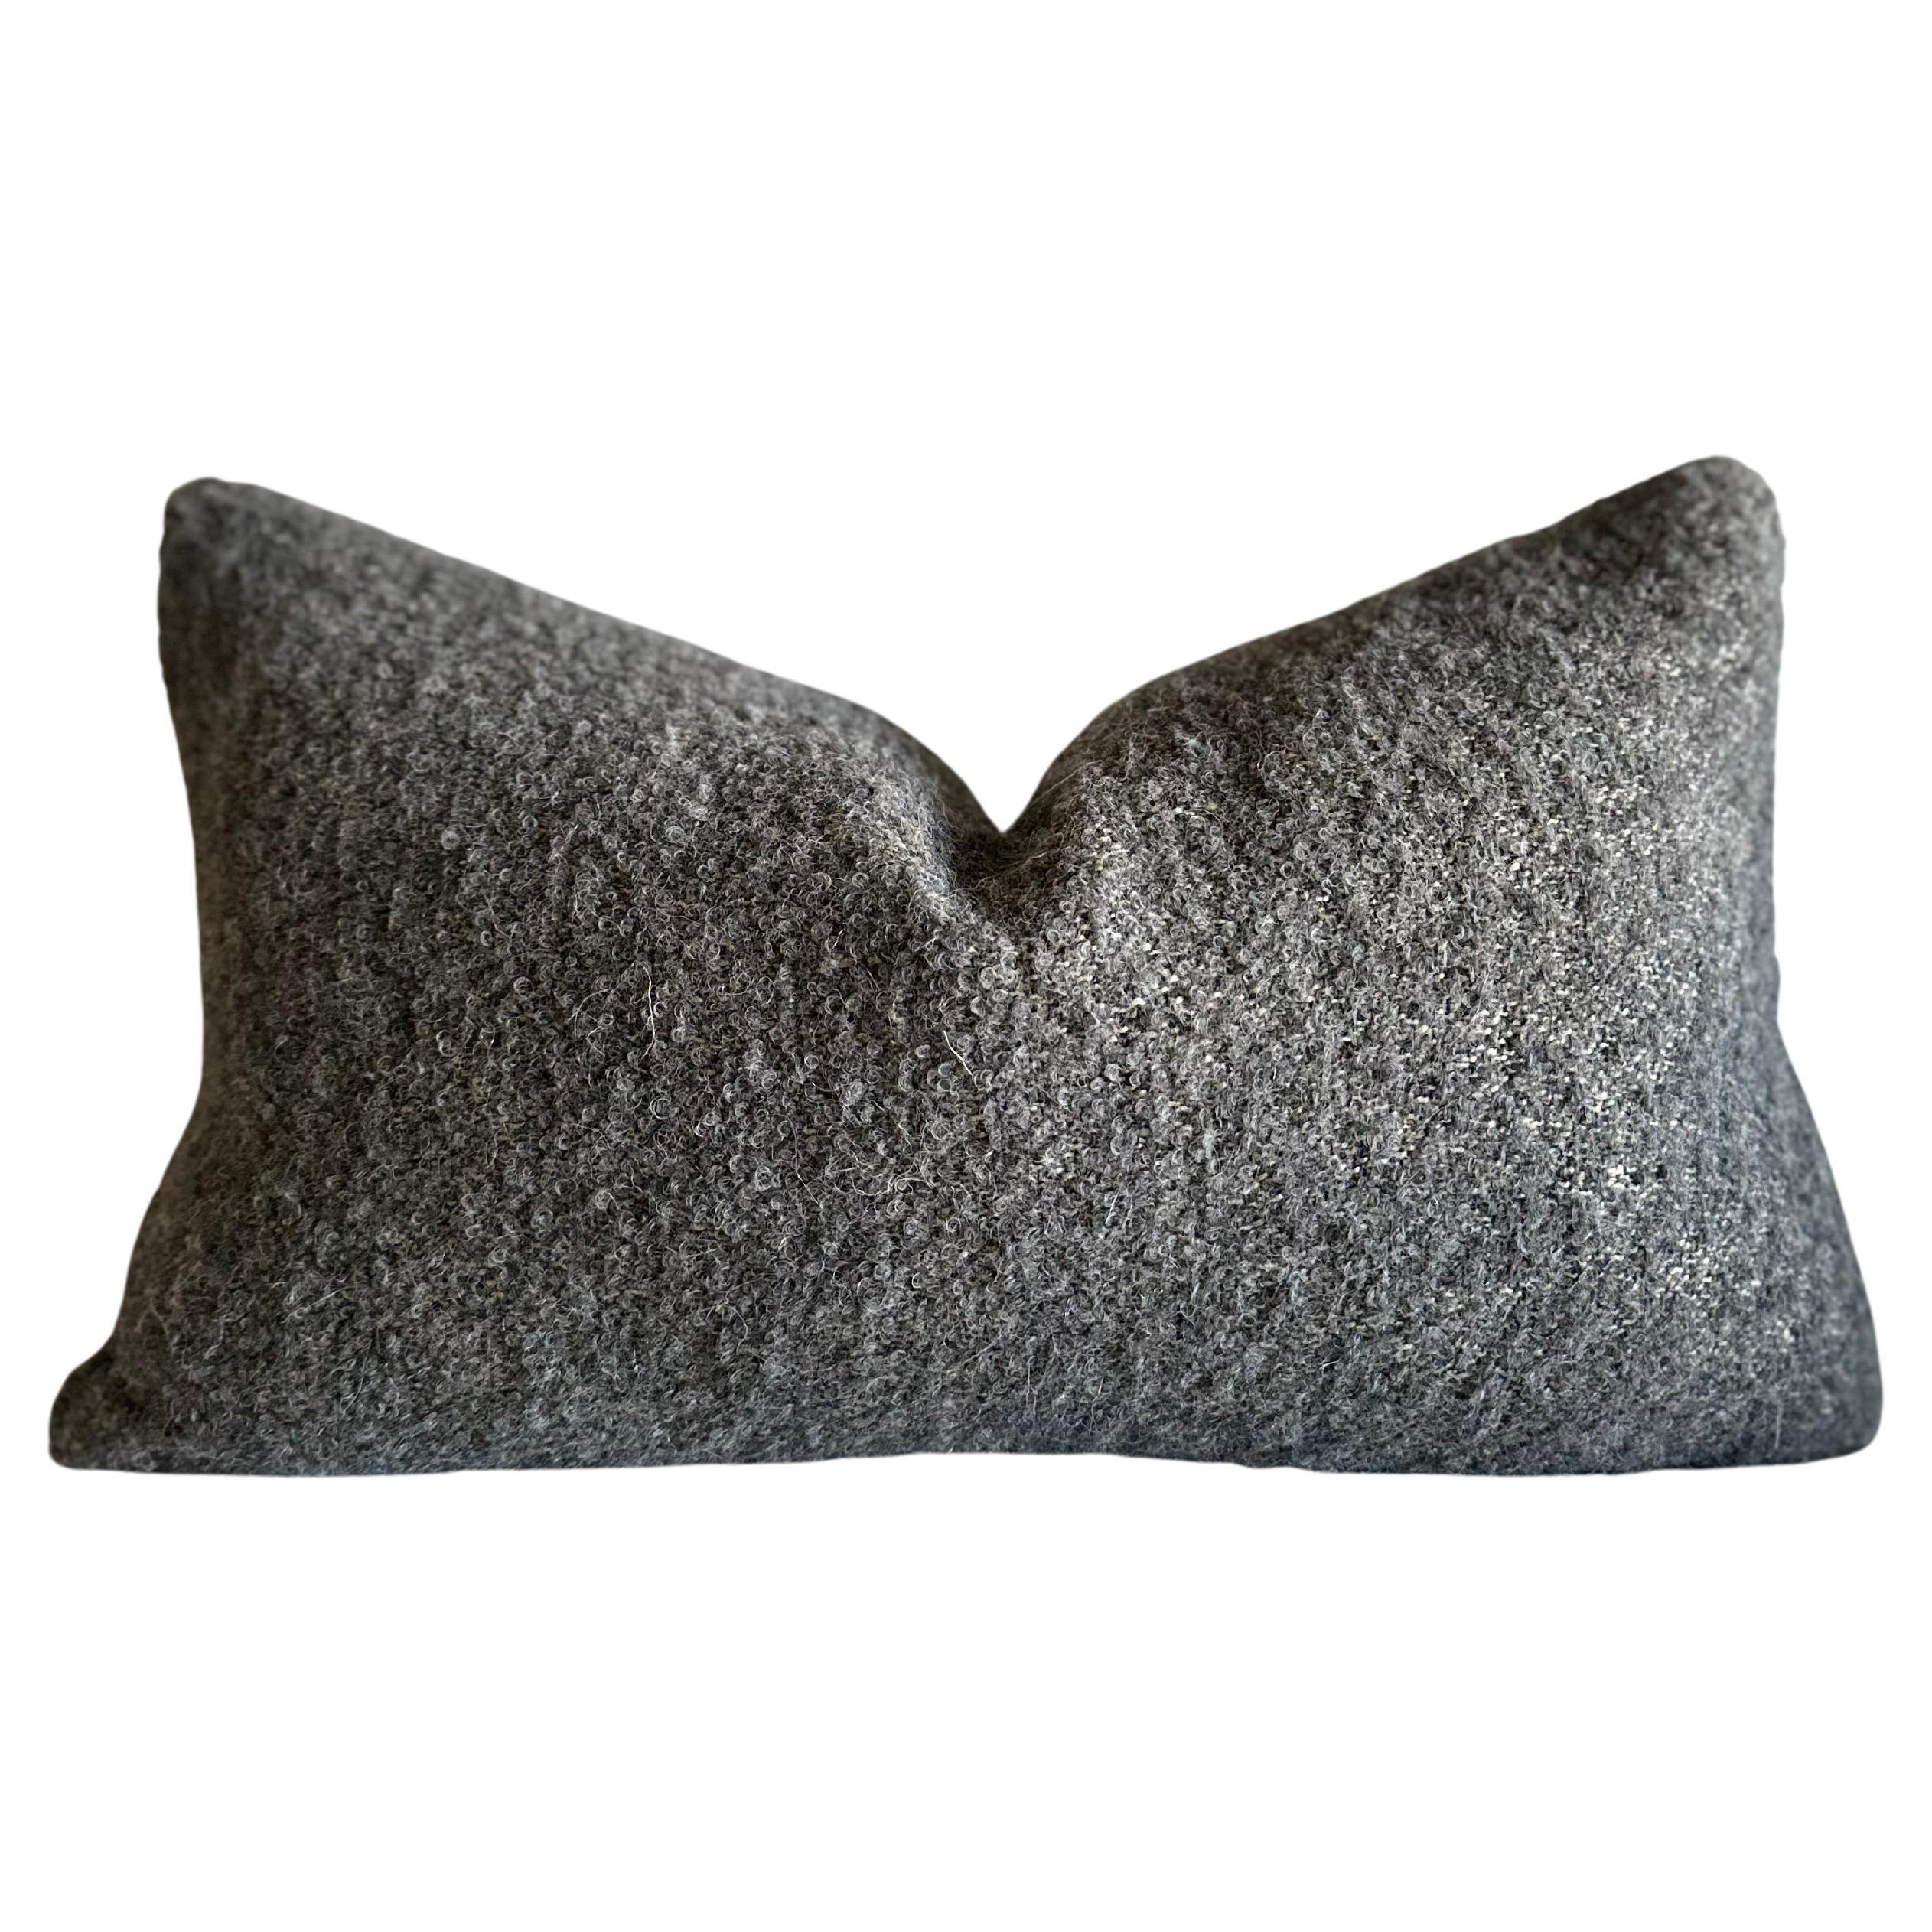 Woven Belgium Wool and Linen Lumbar Pillow in Smoke Boucle Fabric